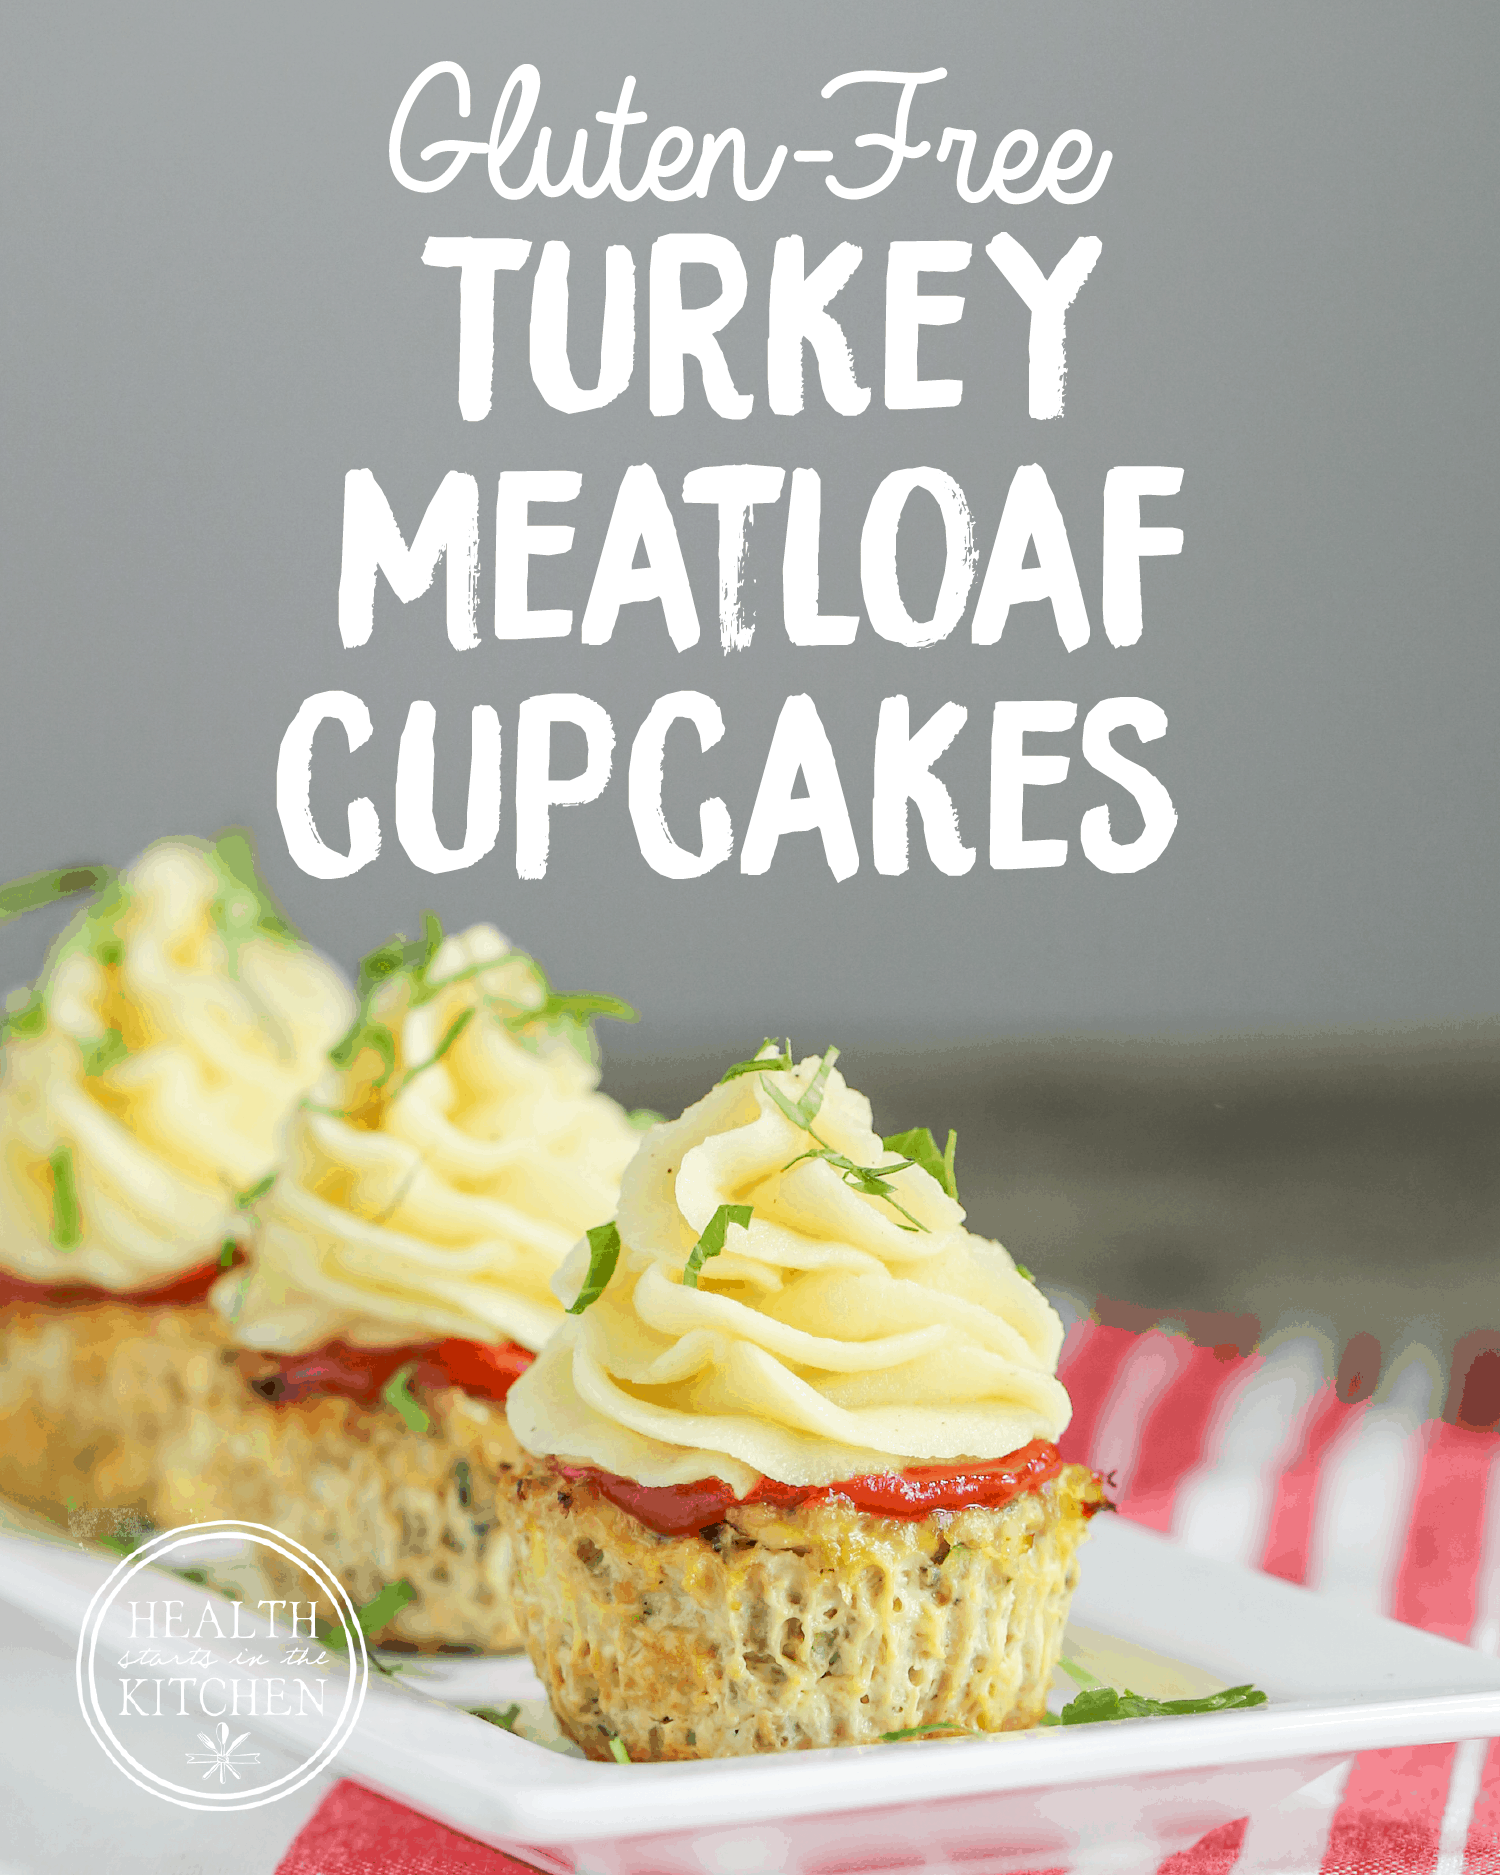 Gluten-Free Turkey Meatloaf Cupcakes